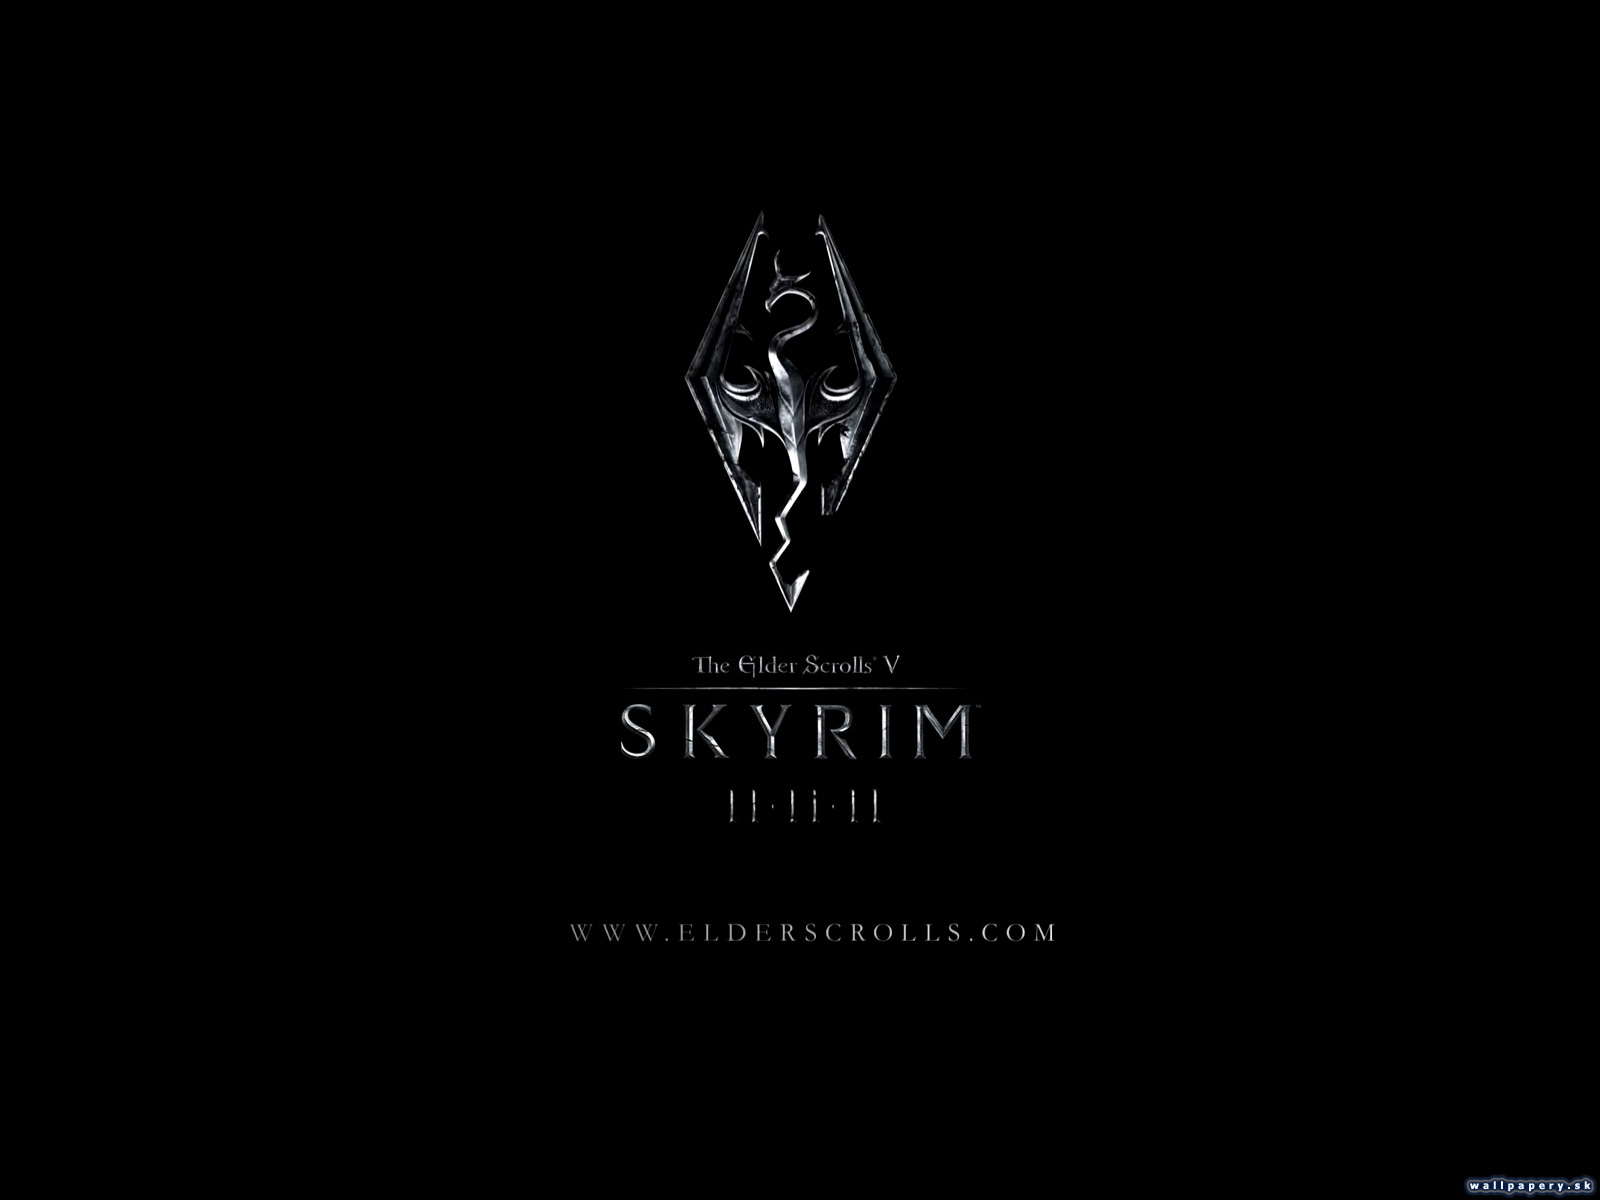 The Elder Scrolls 5: Skyrim - wallpaper 19